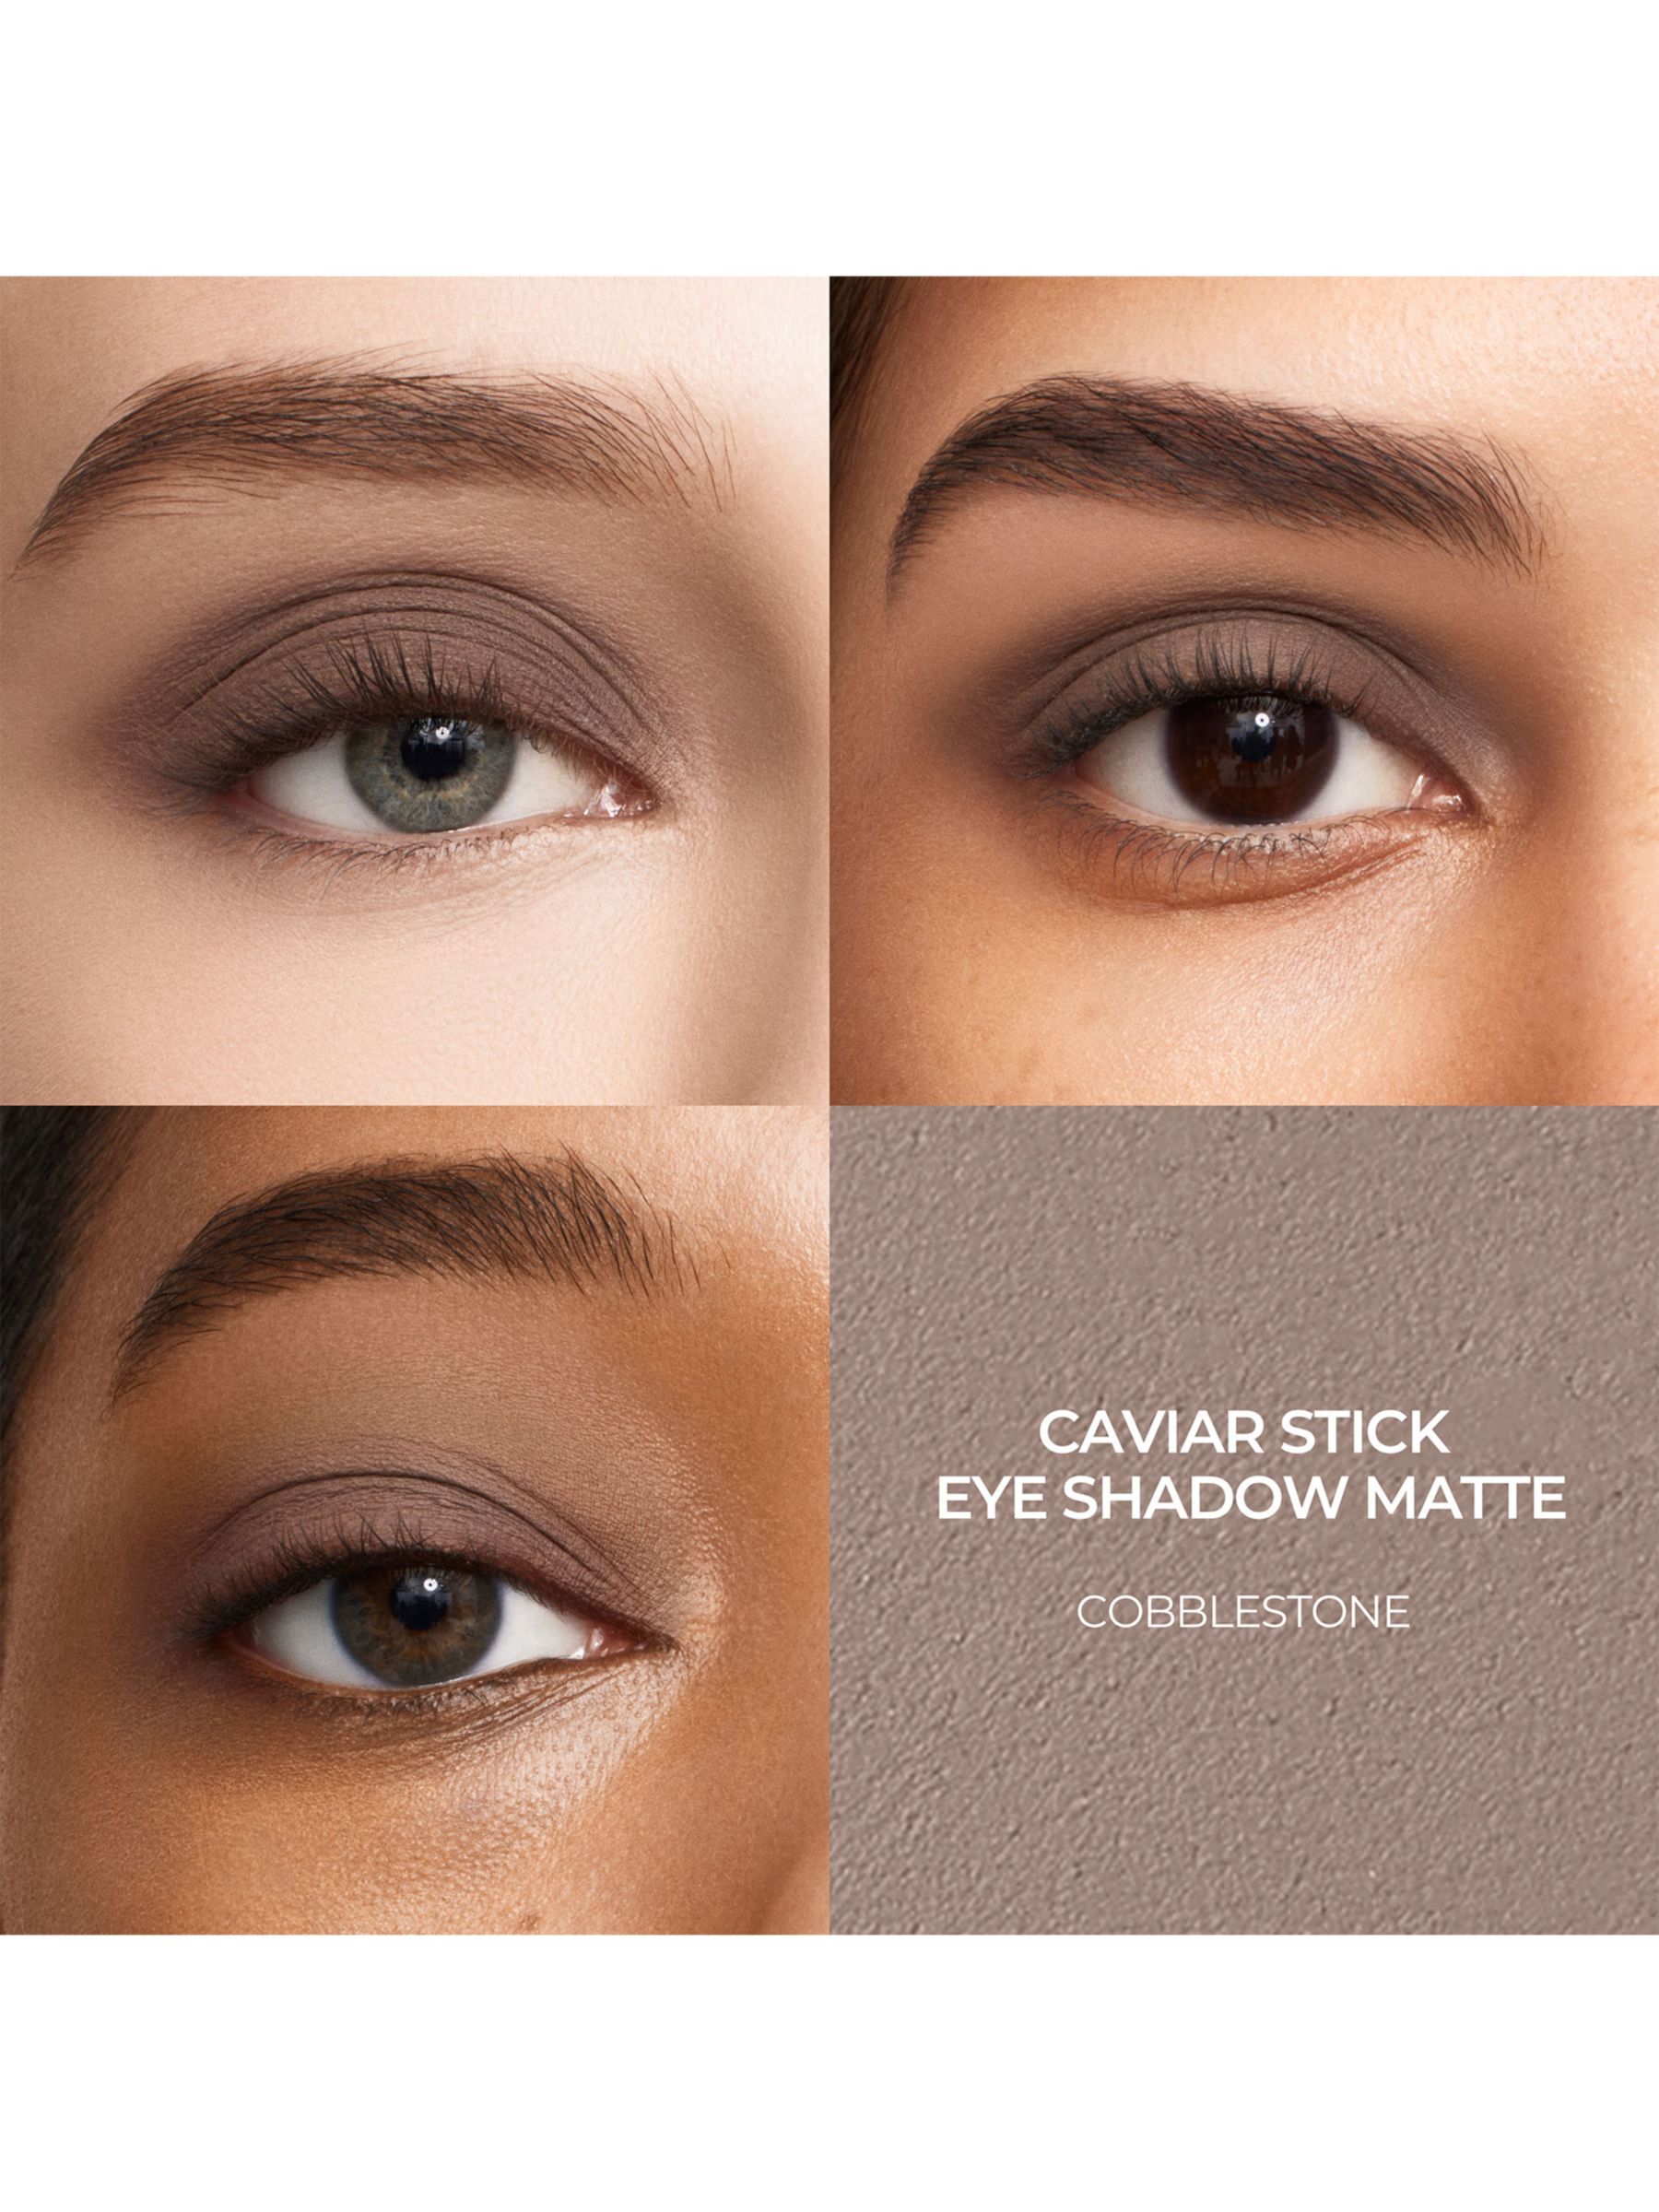 & Lewis John Cobblestone Eyeshadow at Laura Caviar Matte, Partners Stick Mercier